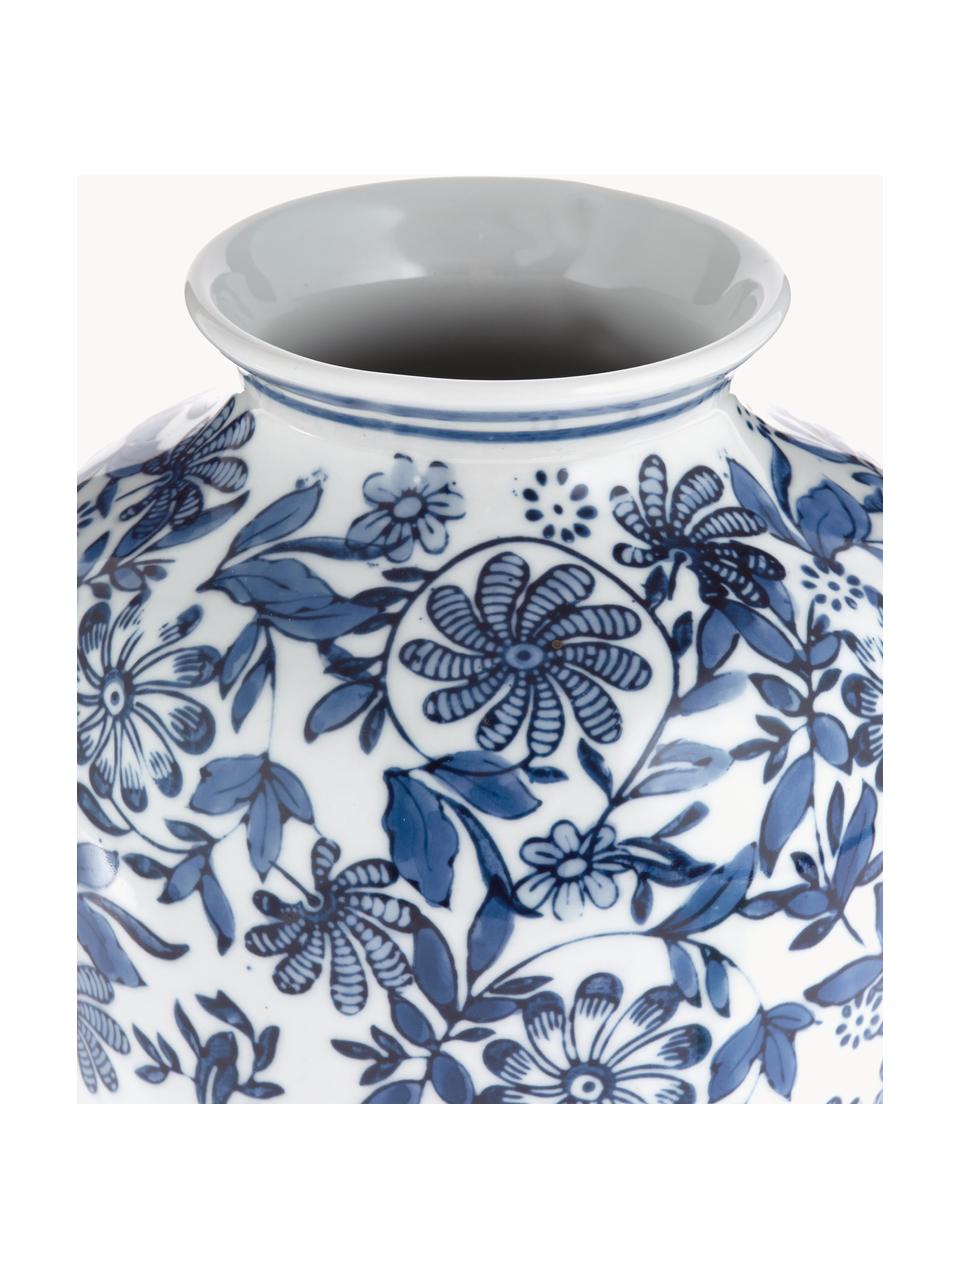 Velká dekoratívna váza z porcelánu Lin, V 31 cm, Porcelán, Modrá, biela, Ø 16 x V 31 cm